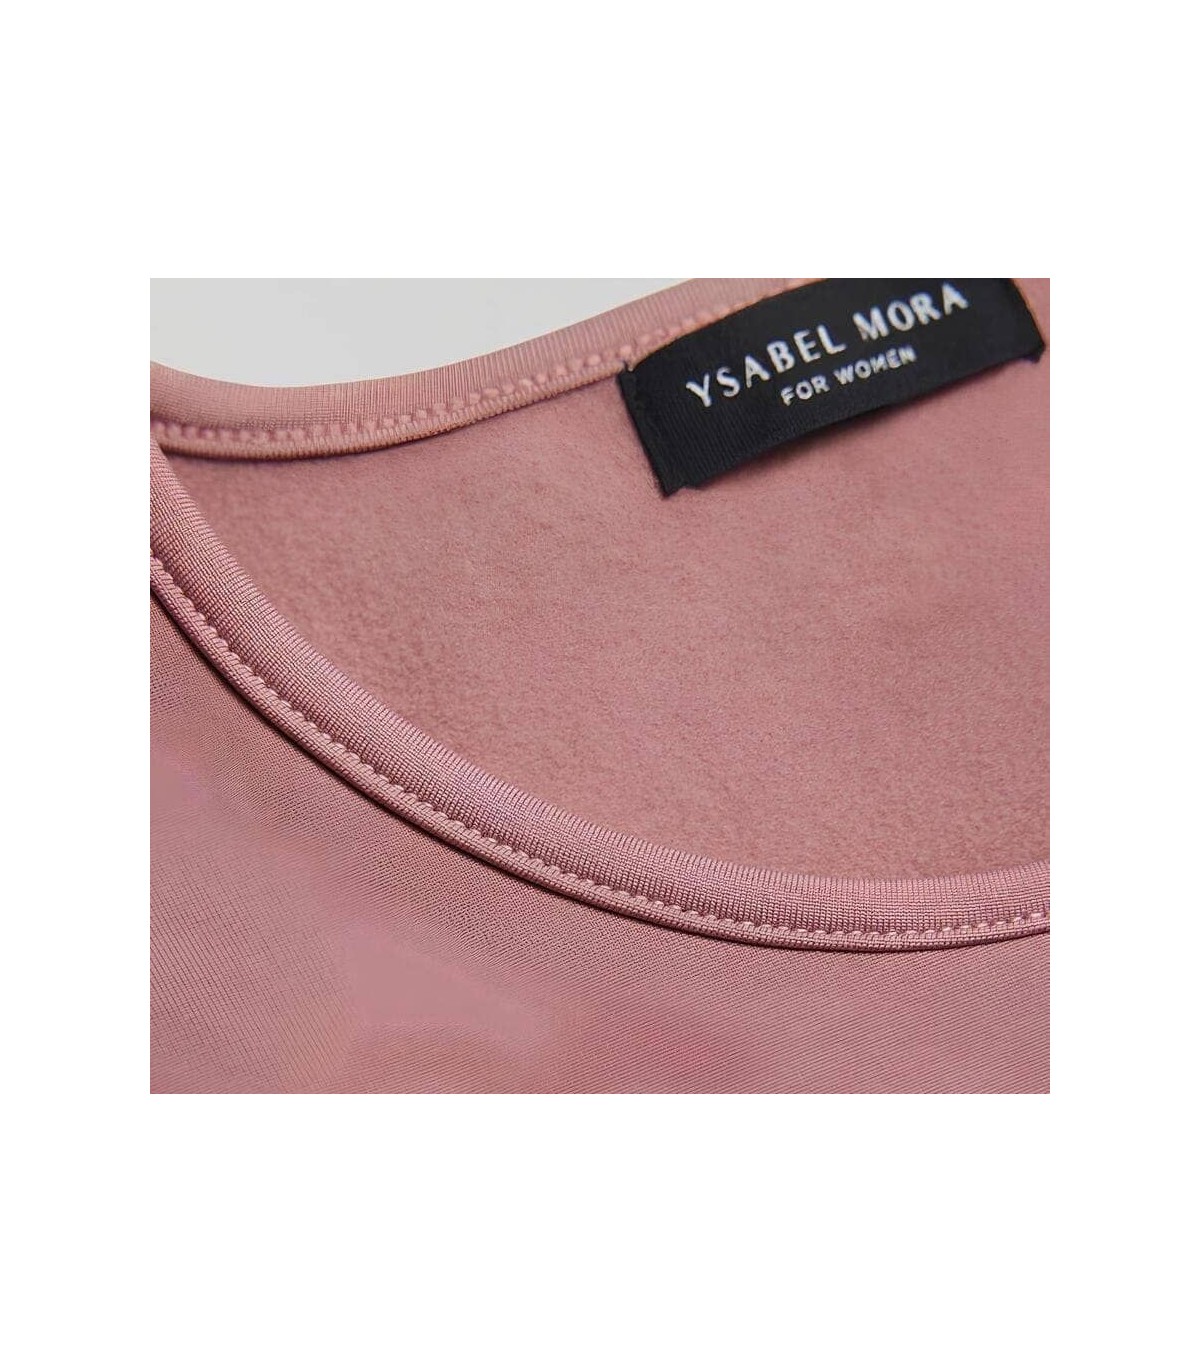 Camiseta Térmica Mujer Rosa 70015 Ysabel Mora - Elegancia y Calidez